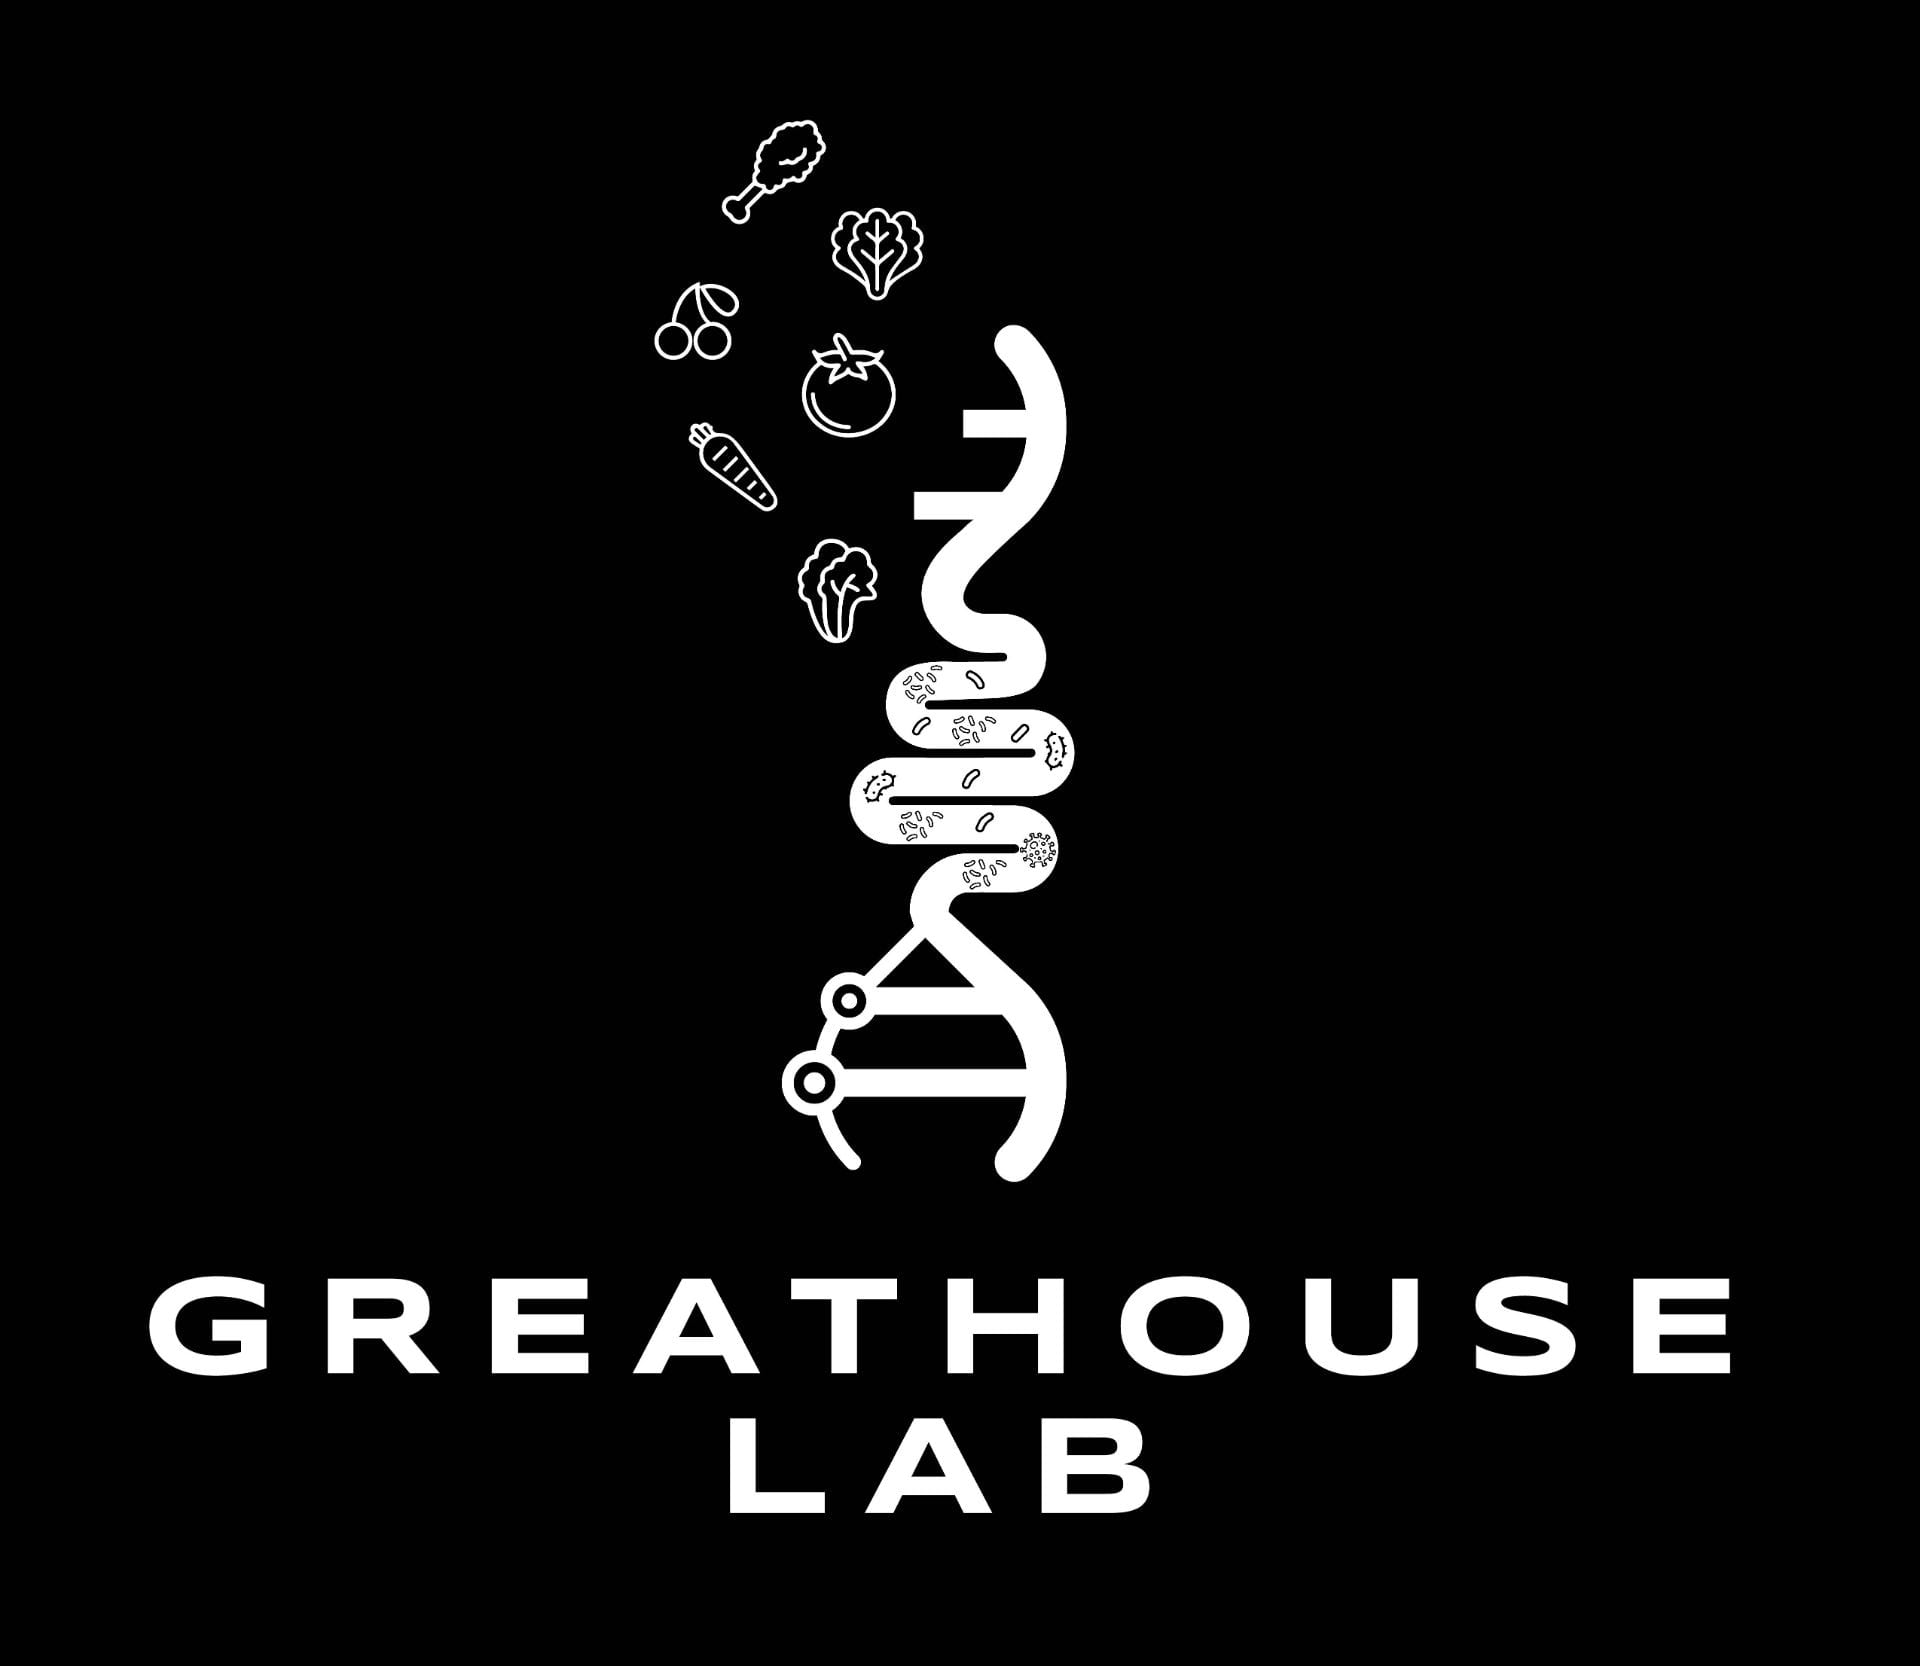 Greathouse Lab